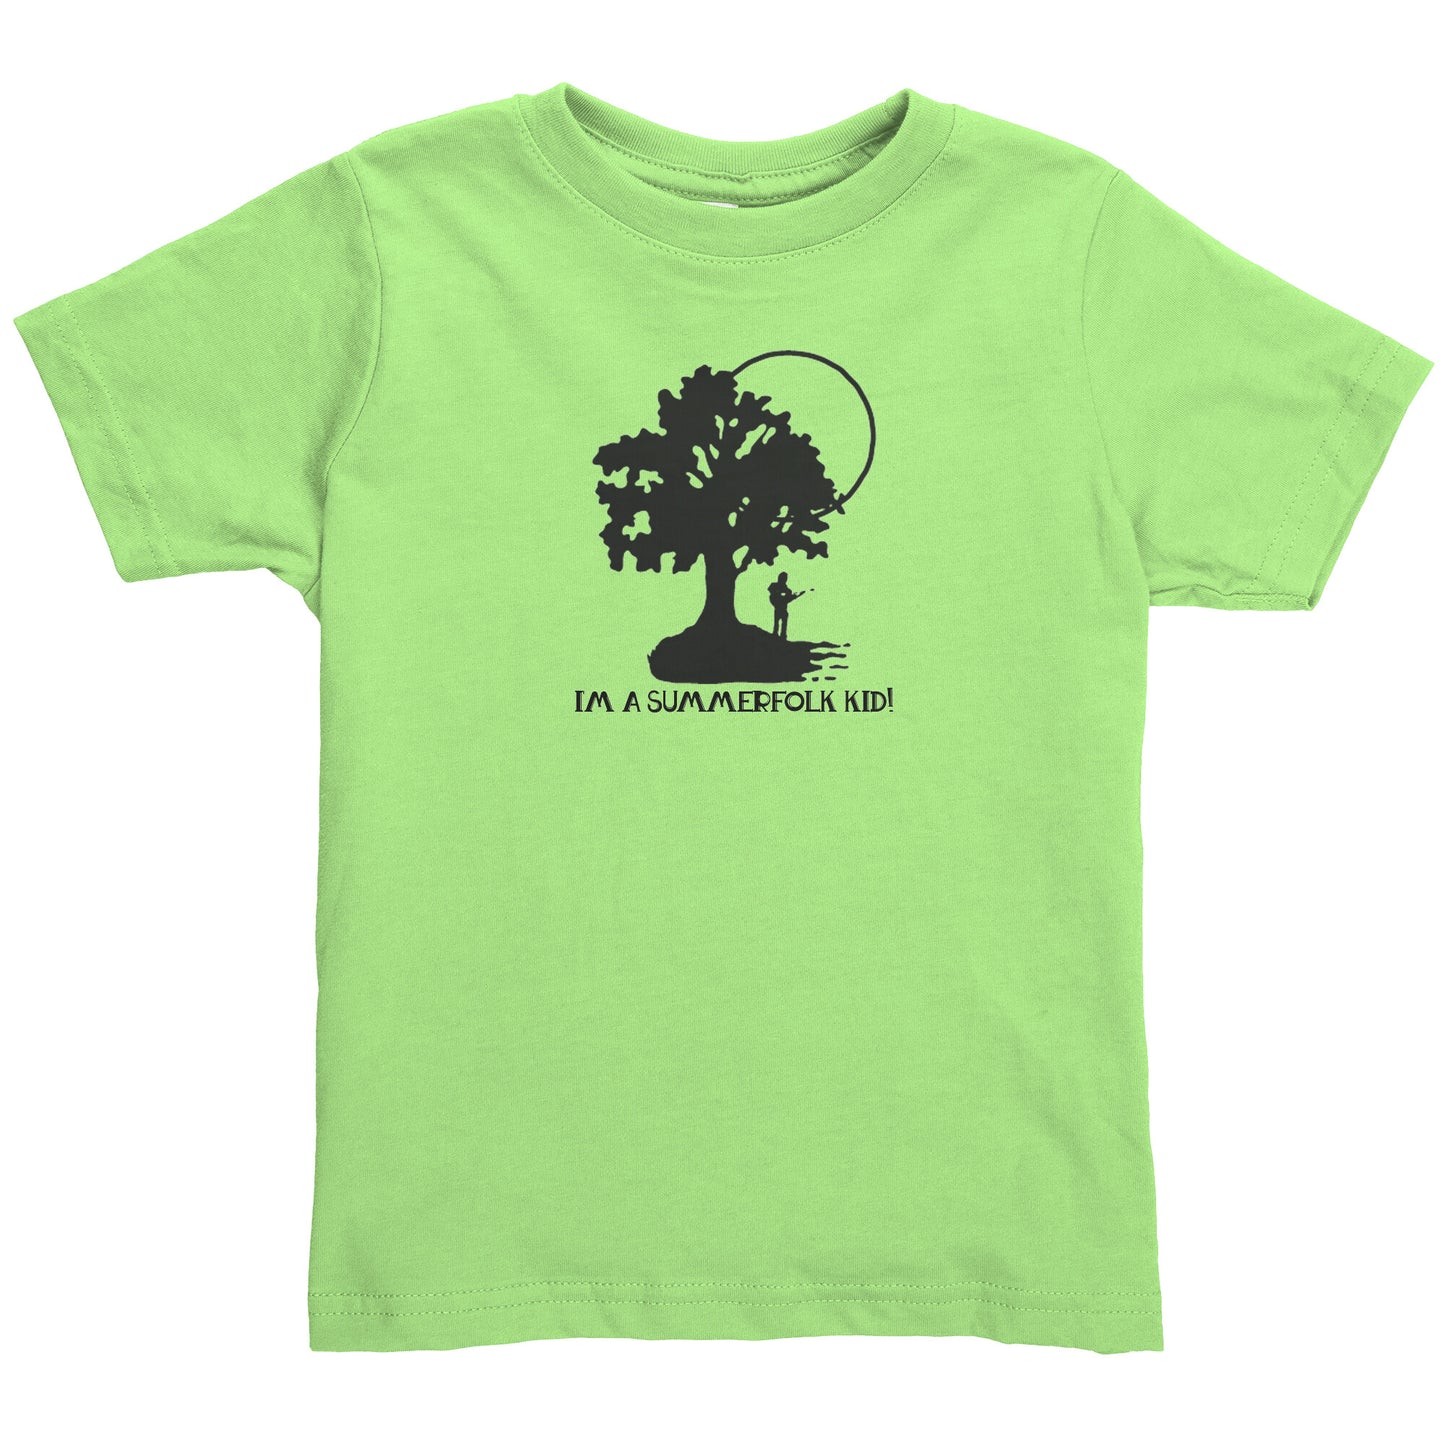 Summerfolk Kid Toddler Shirt (online only)